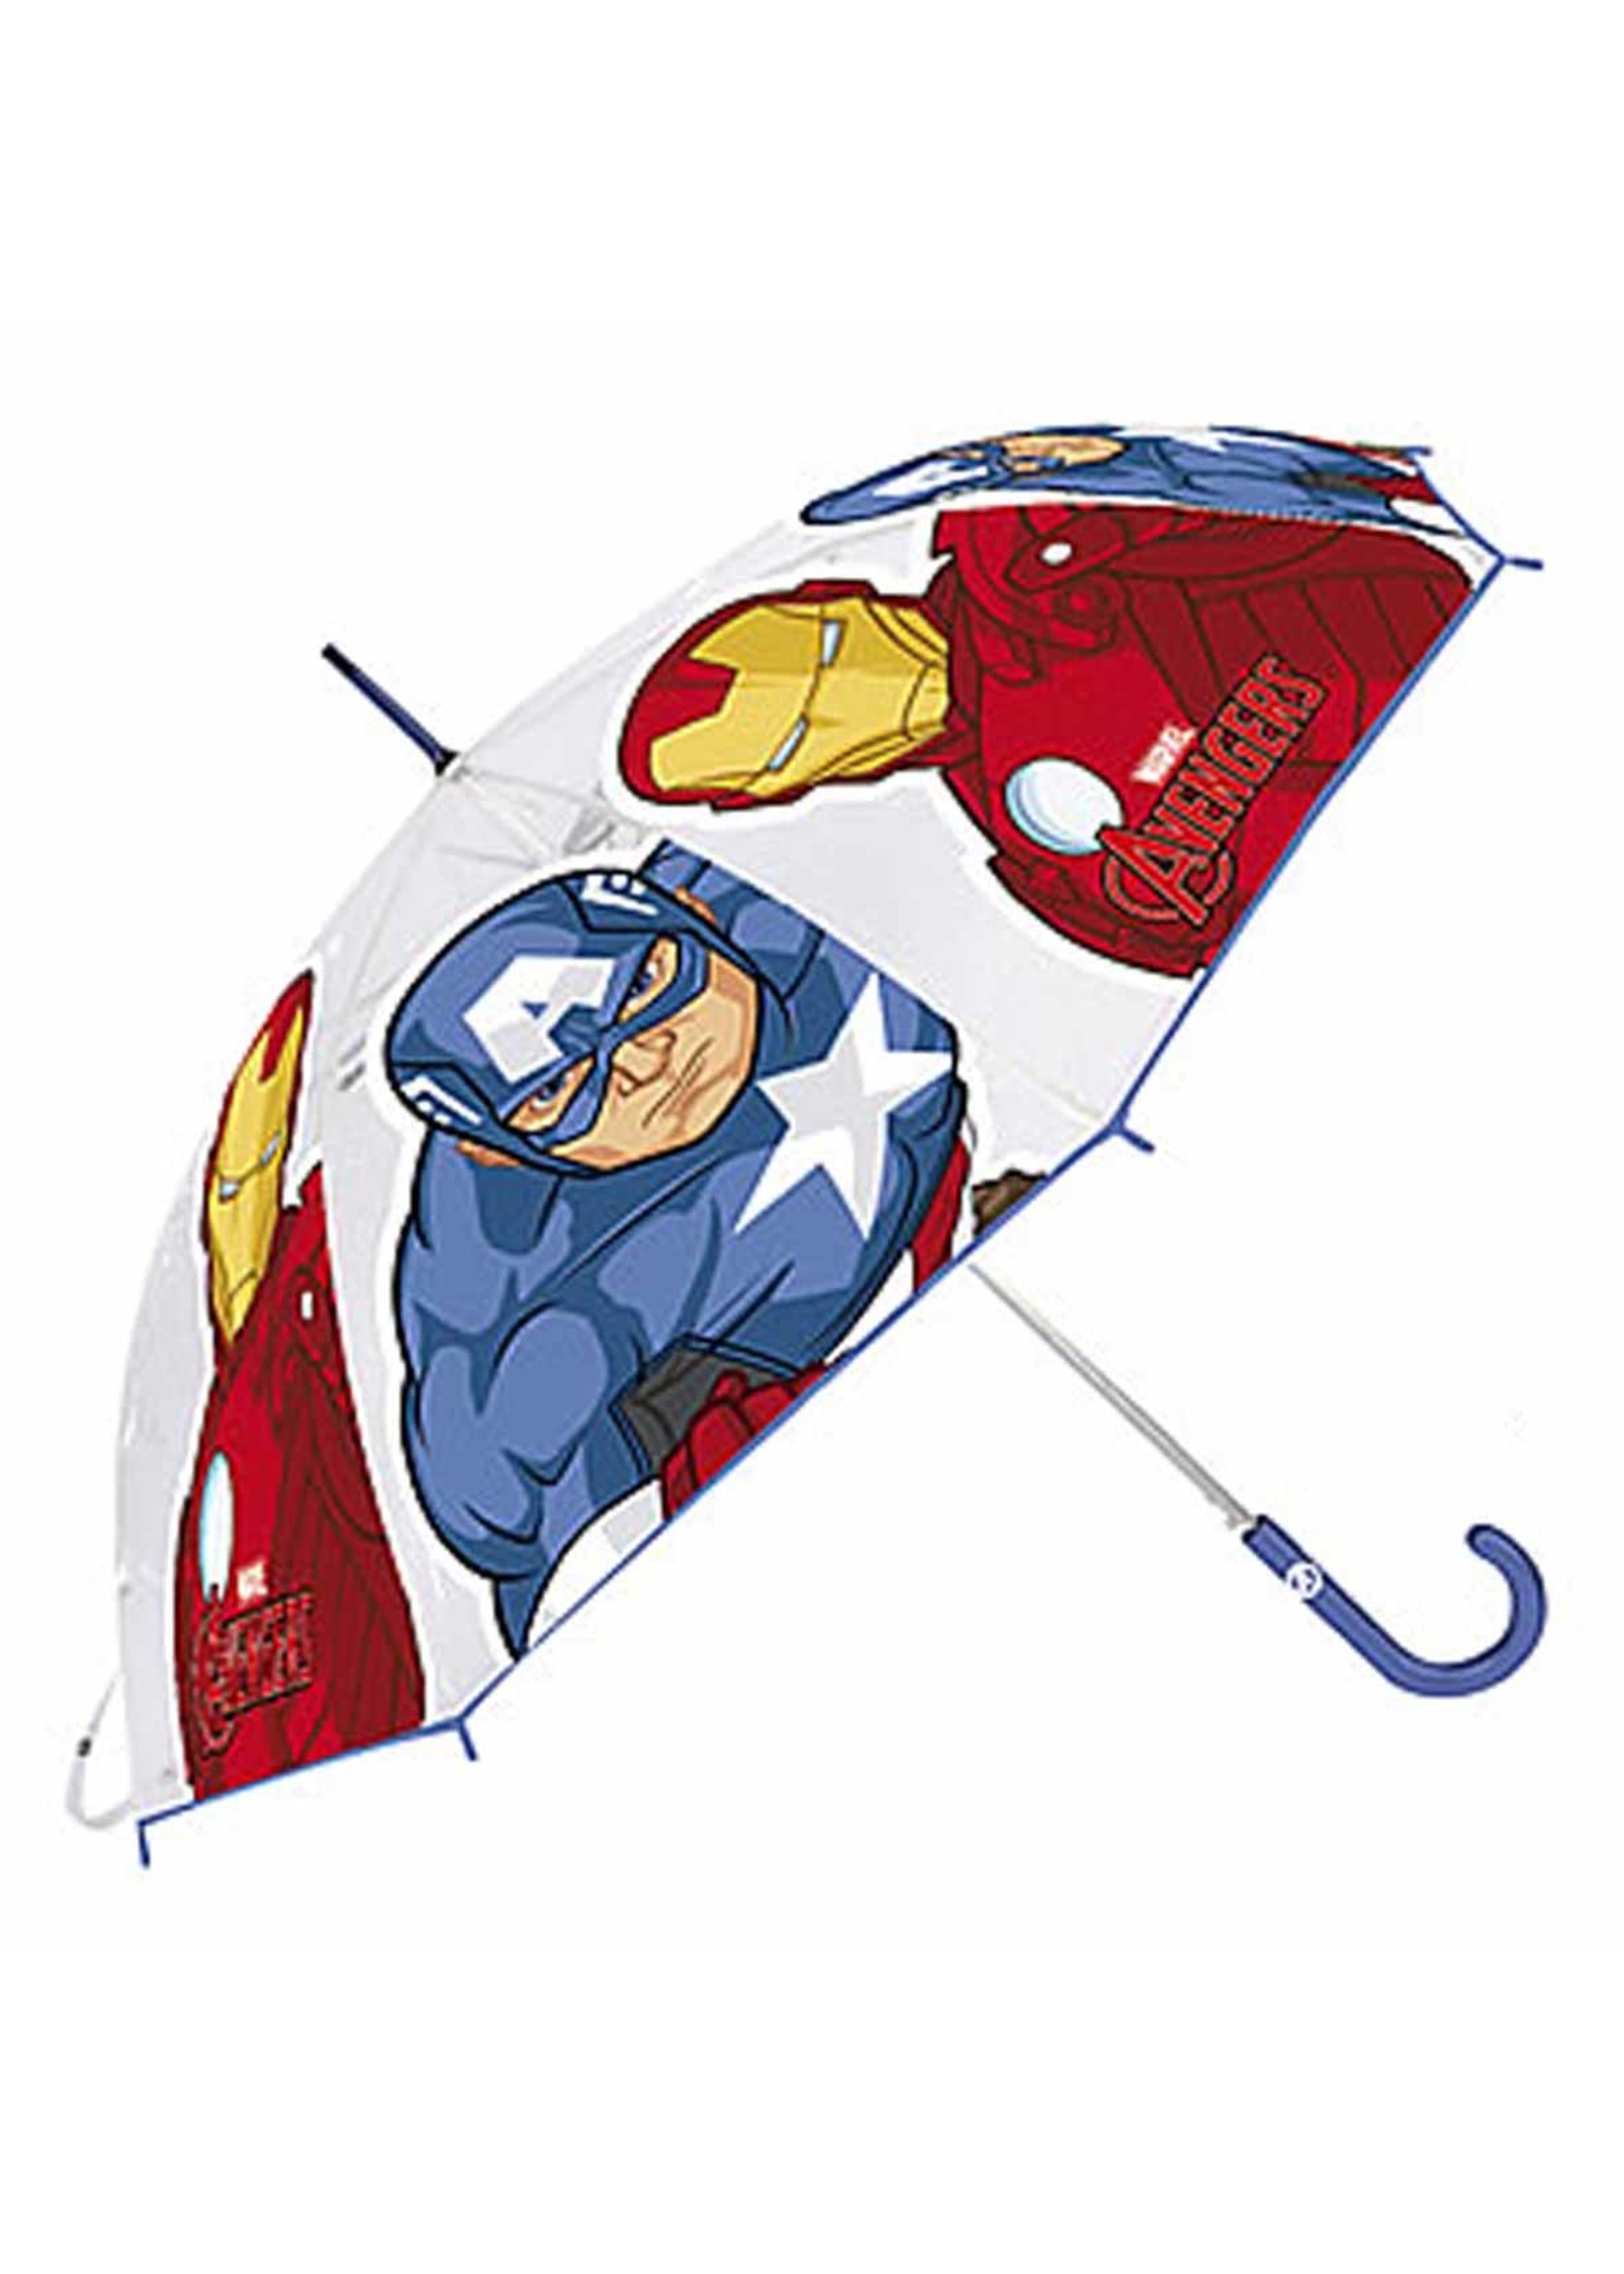 Marvel Avengers paraplu van Marvel wit-blauw